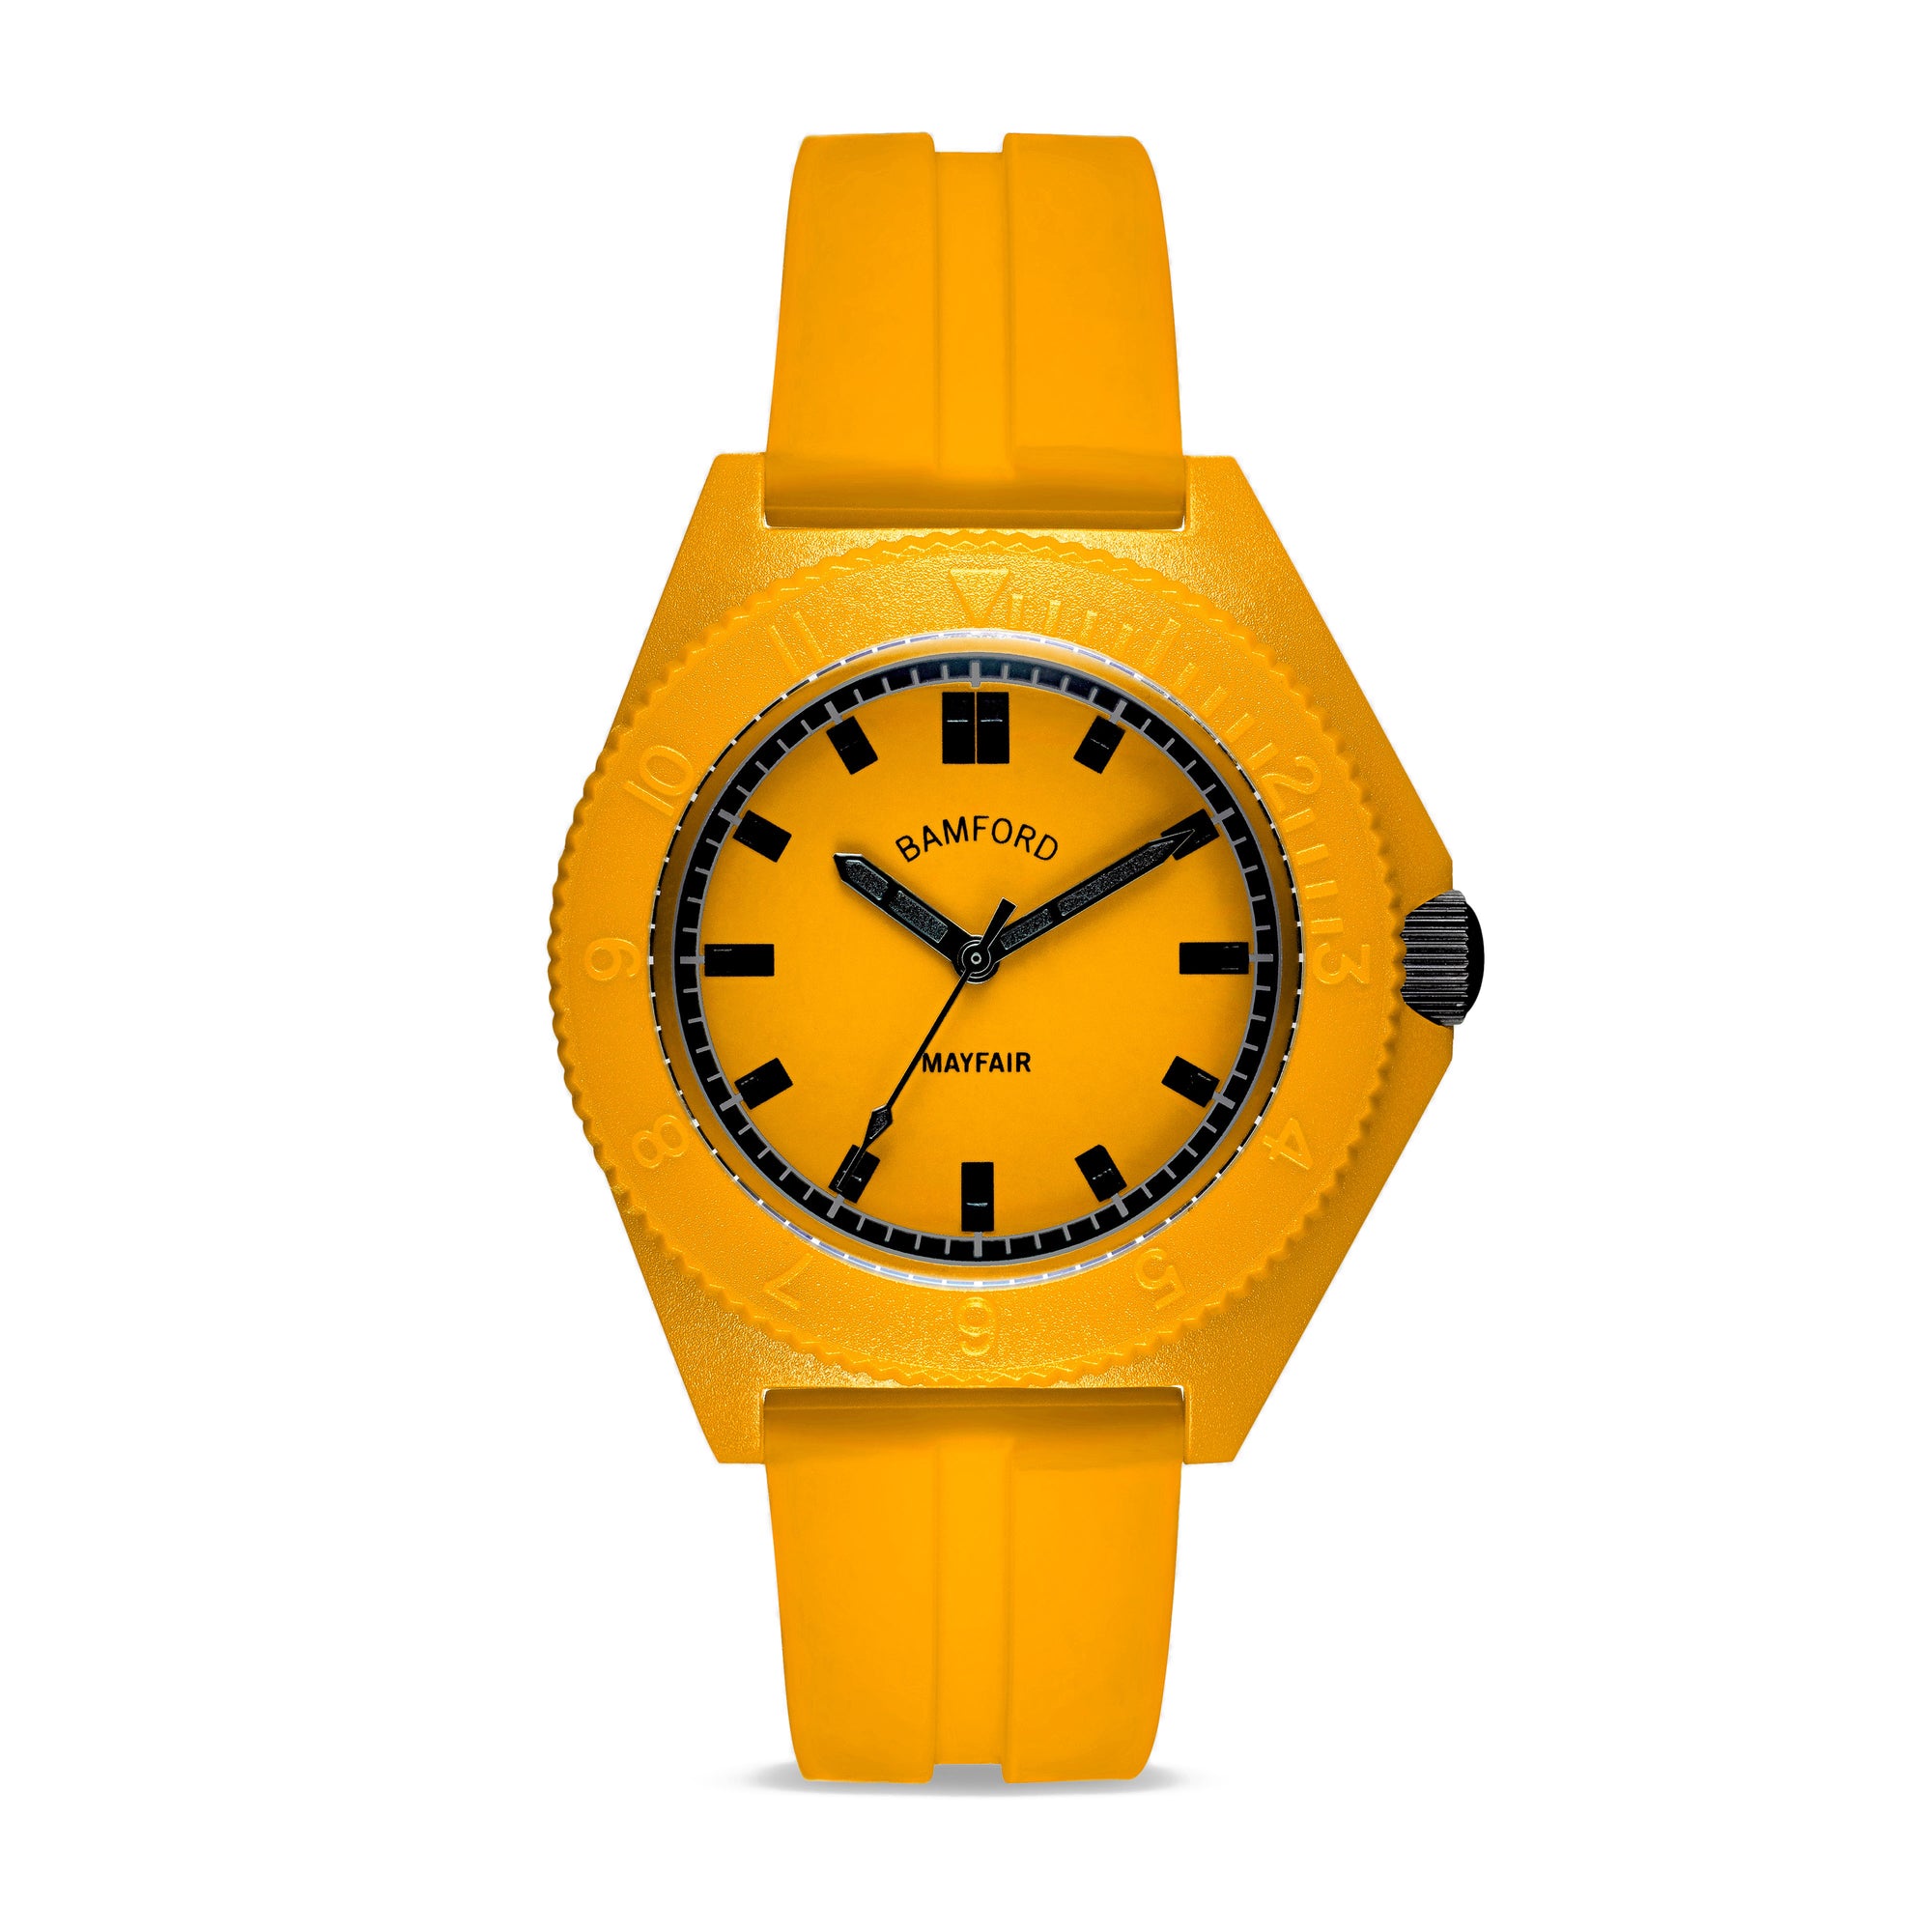 Bamford Watches - Mayfair Sport - (Yellow) view 1